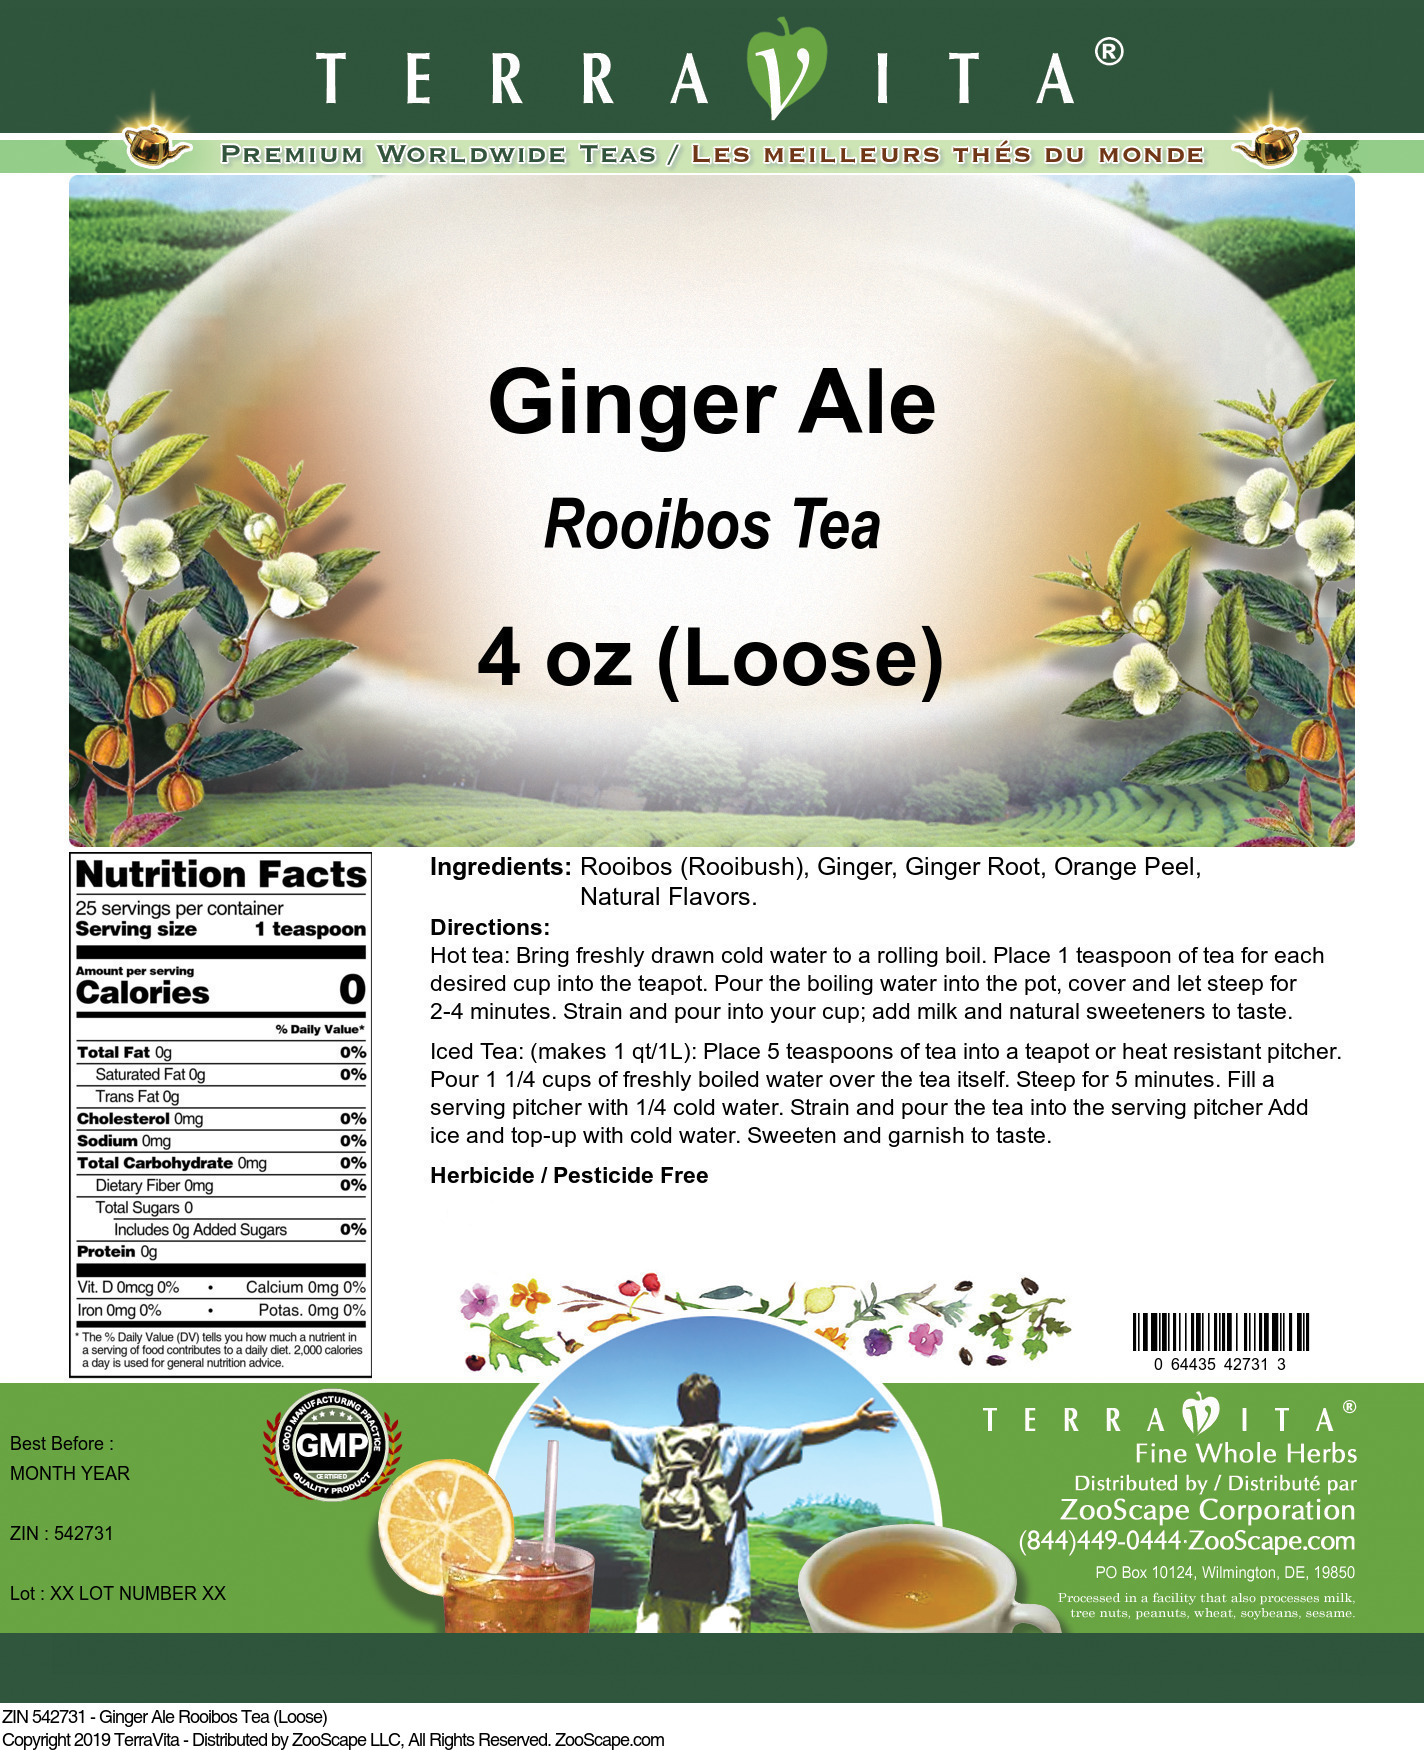 Ginger Ale Rooibos Tea (Loose) - Label